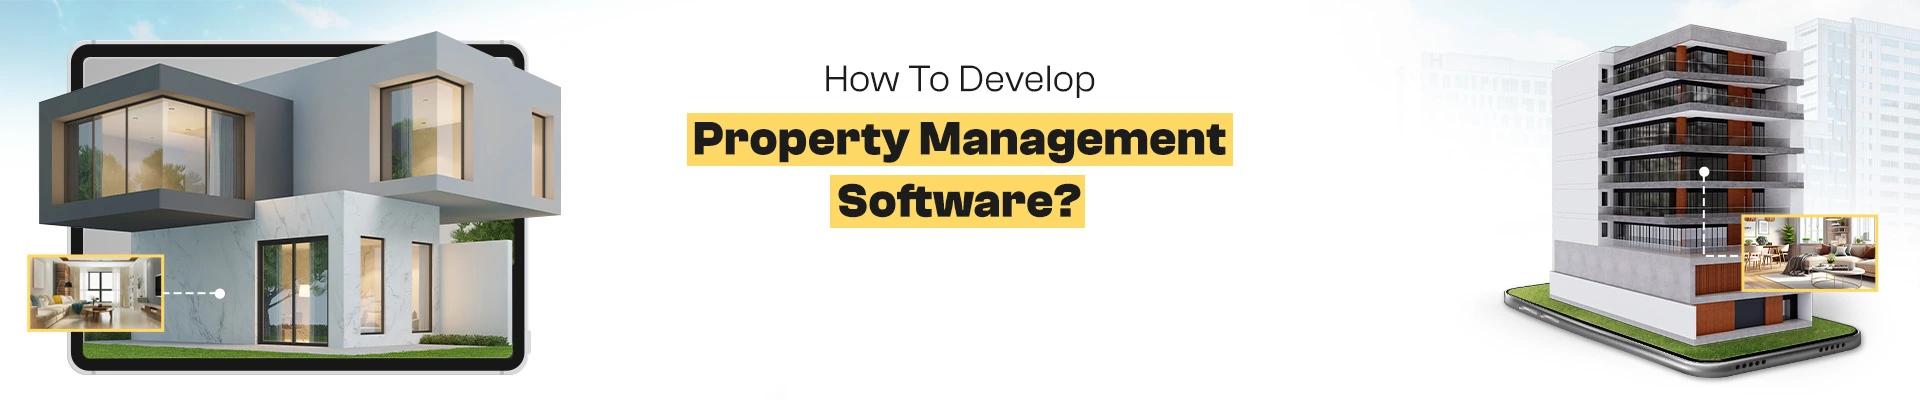 Develop Property Management Software